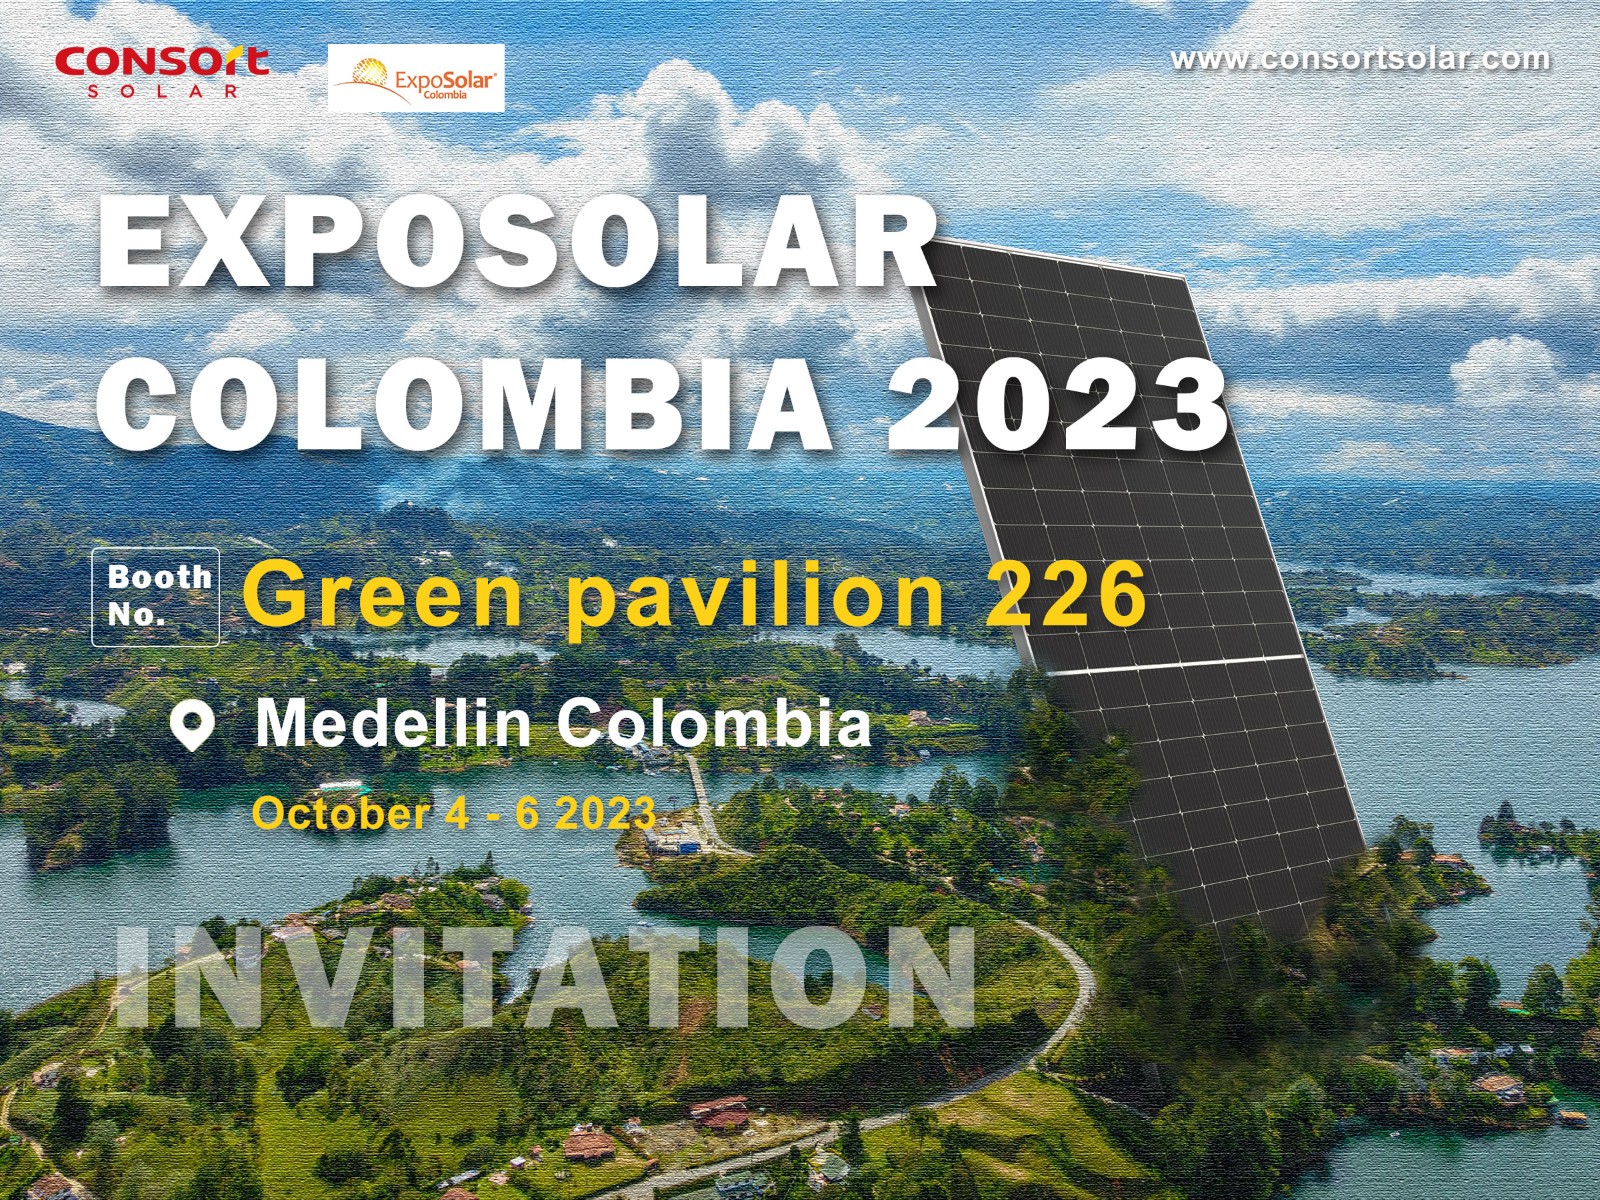 EXPO SOLAR COLOMBIA 2023